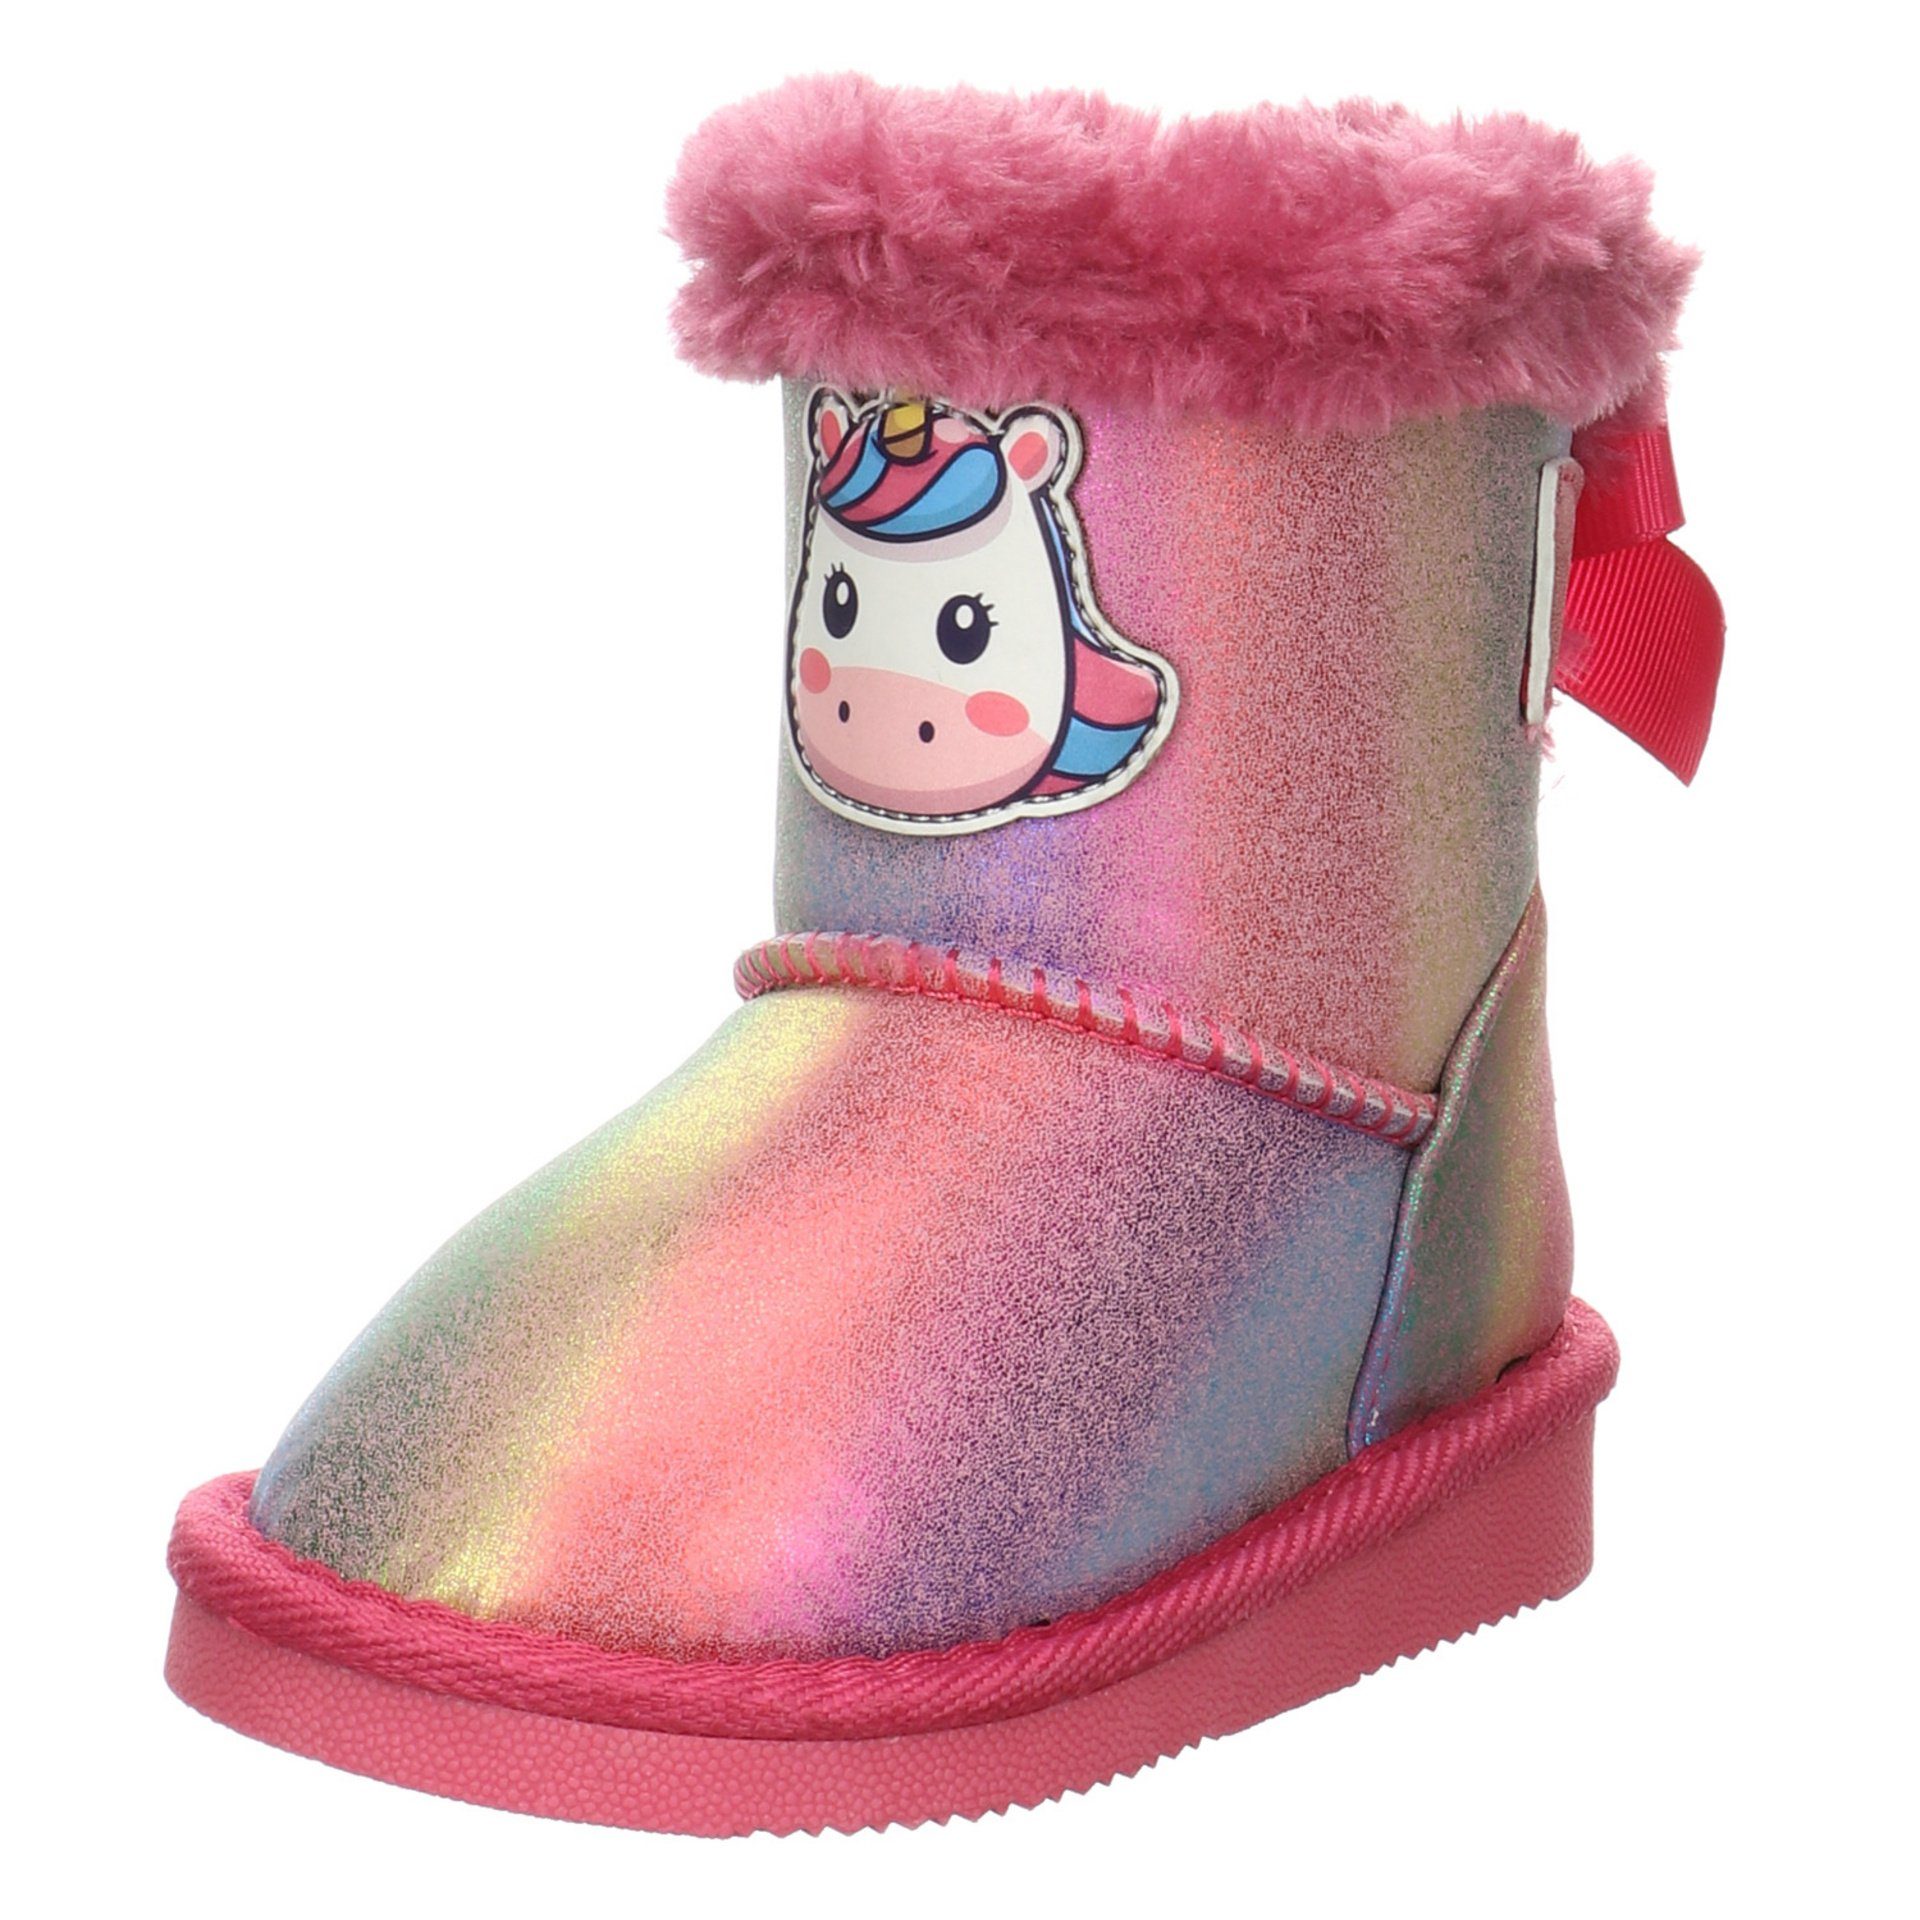 Disney Mädchen Stiefel Schuhe Boots Kinderschuhe Stiefelette Synthetik